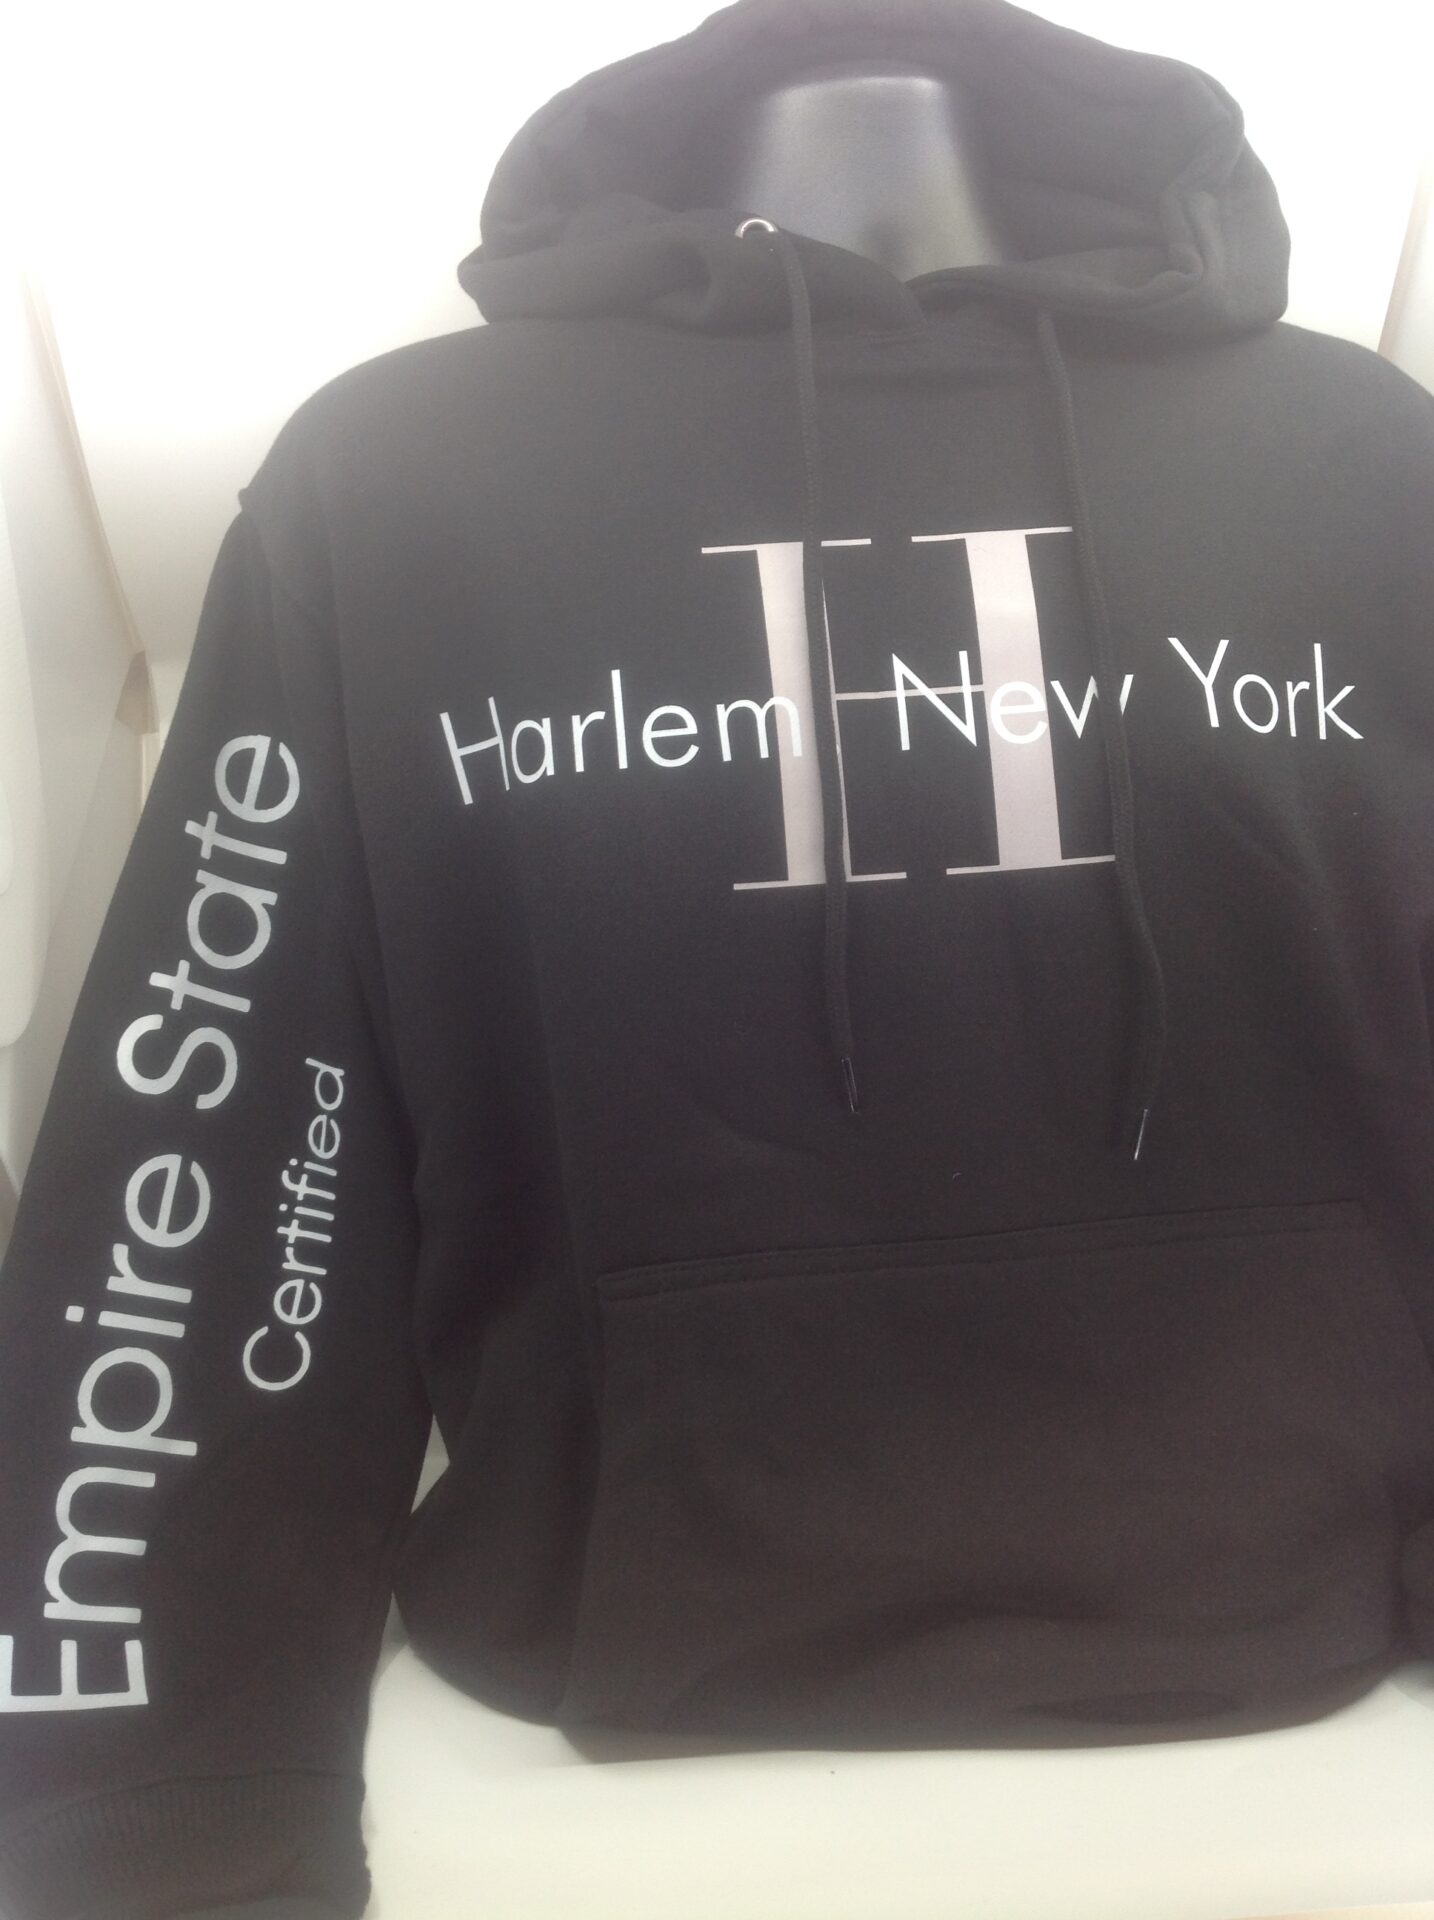 Harlem Empire State Hoodie